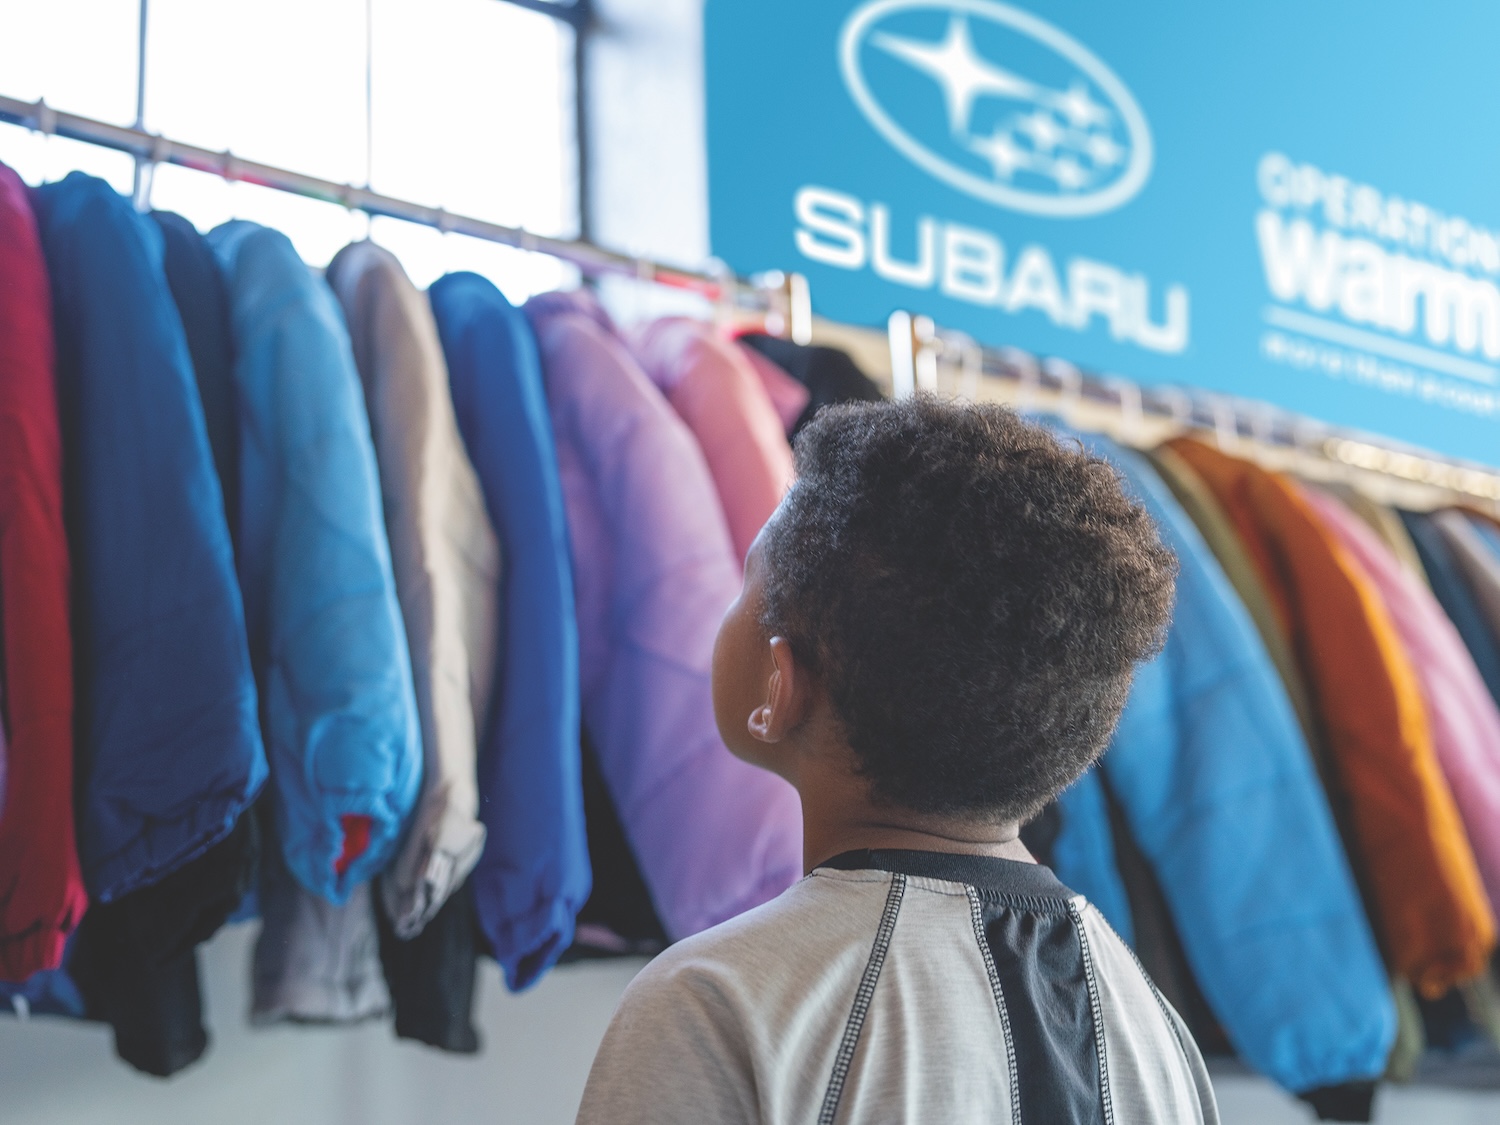 Subaru Coat Drive with Operation Warm - boy looks at coats